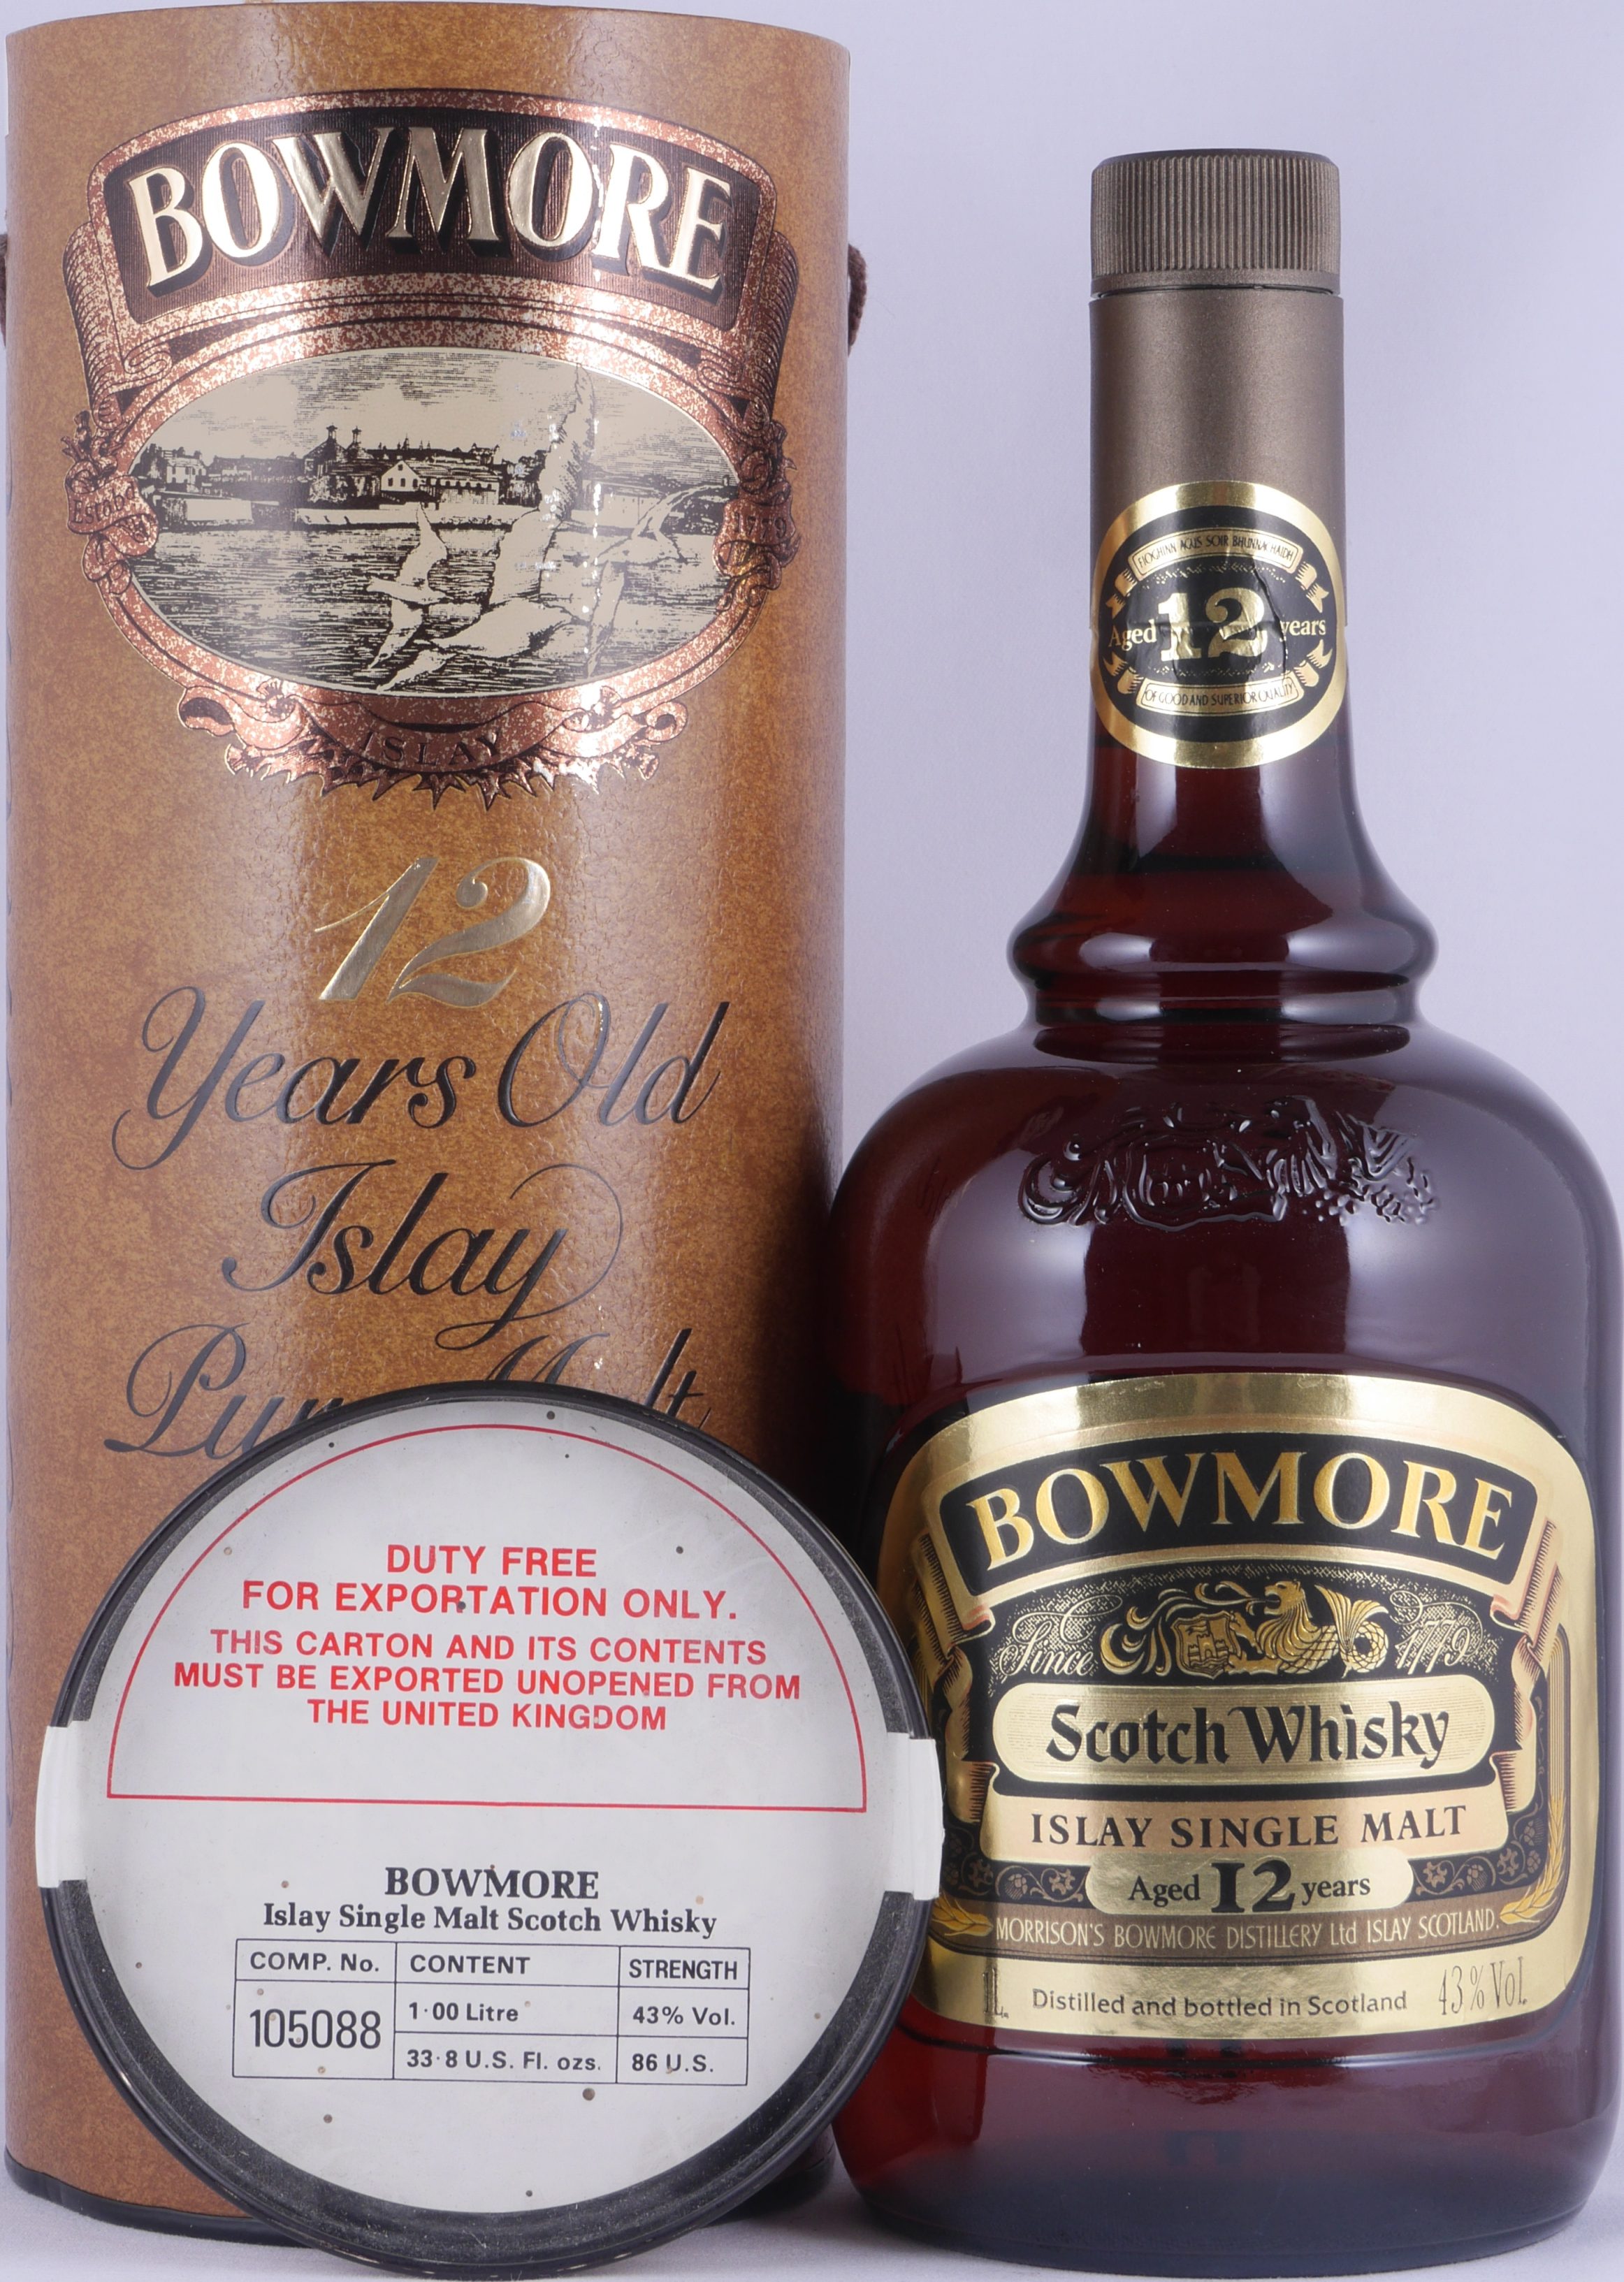 Bowmore 12 Years Gold Label Brown Dumpy Bottle Islay Pure Single Malt  Scotch Whisky 1 Liter-Abfüllung Morrisons Bowmore 43,0% Vol. bei AmCom  sicher online kaufen